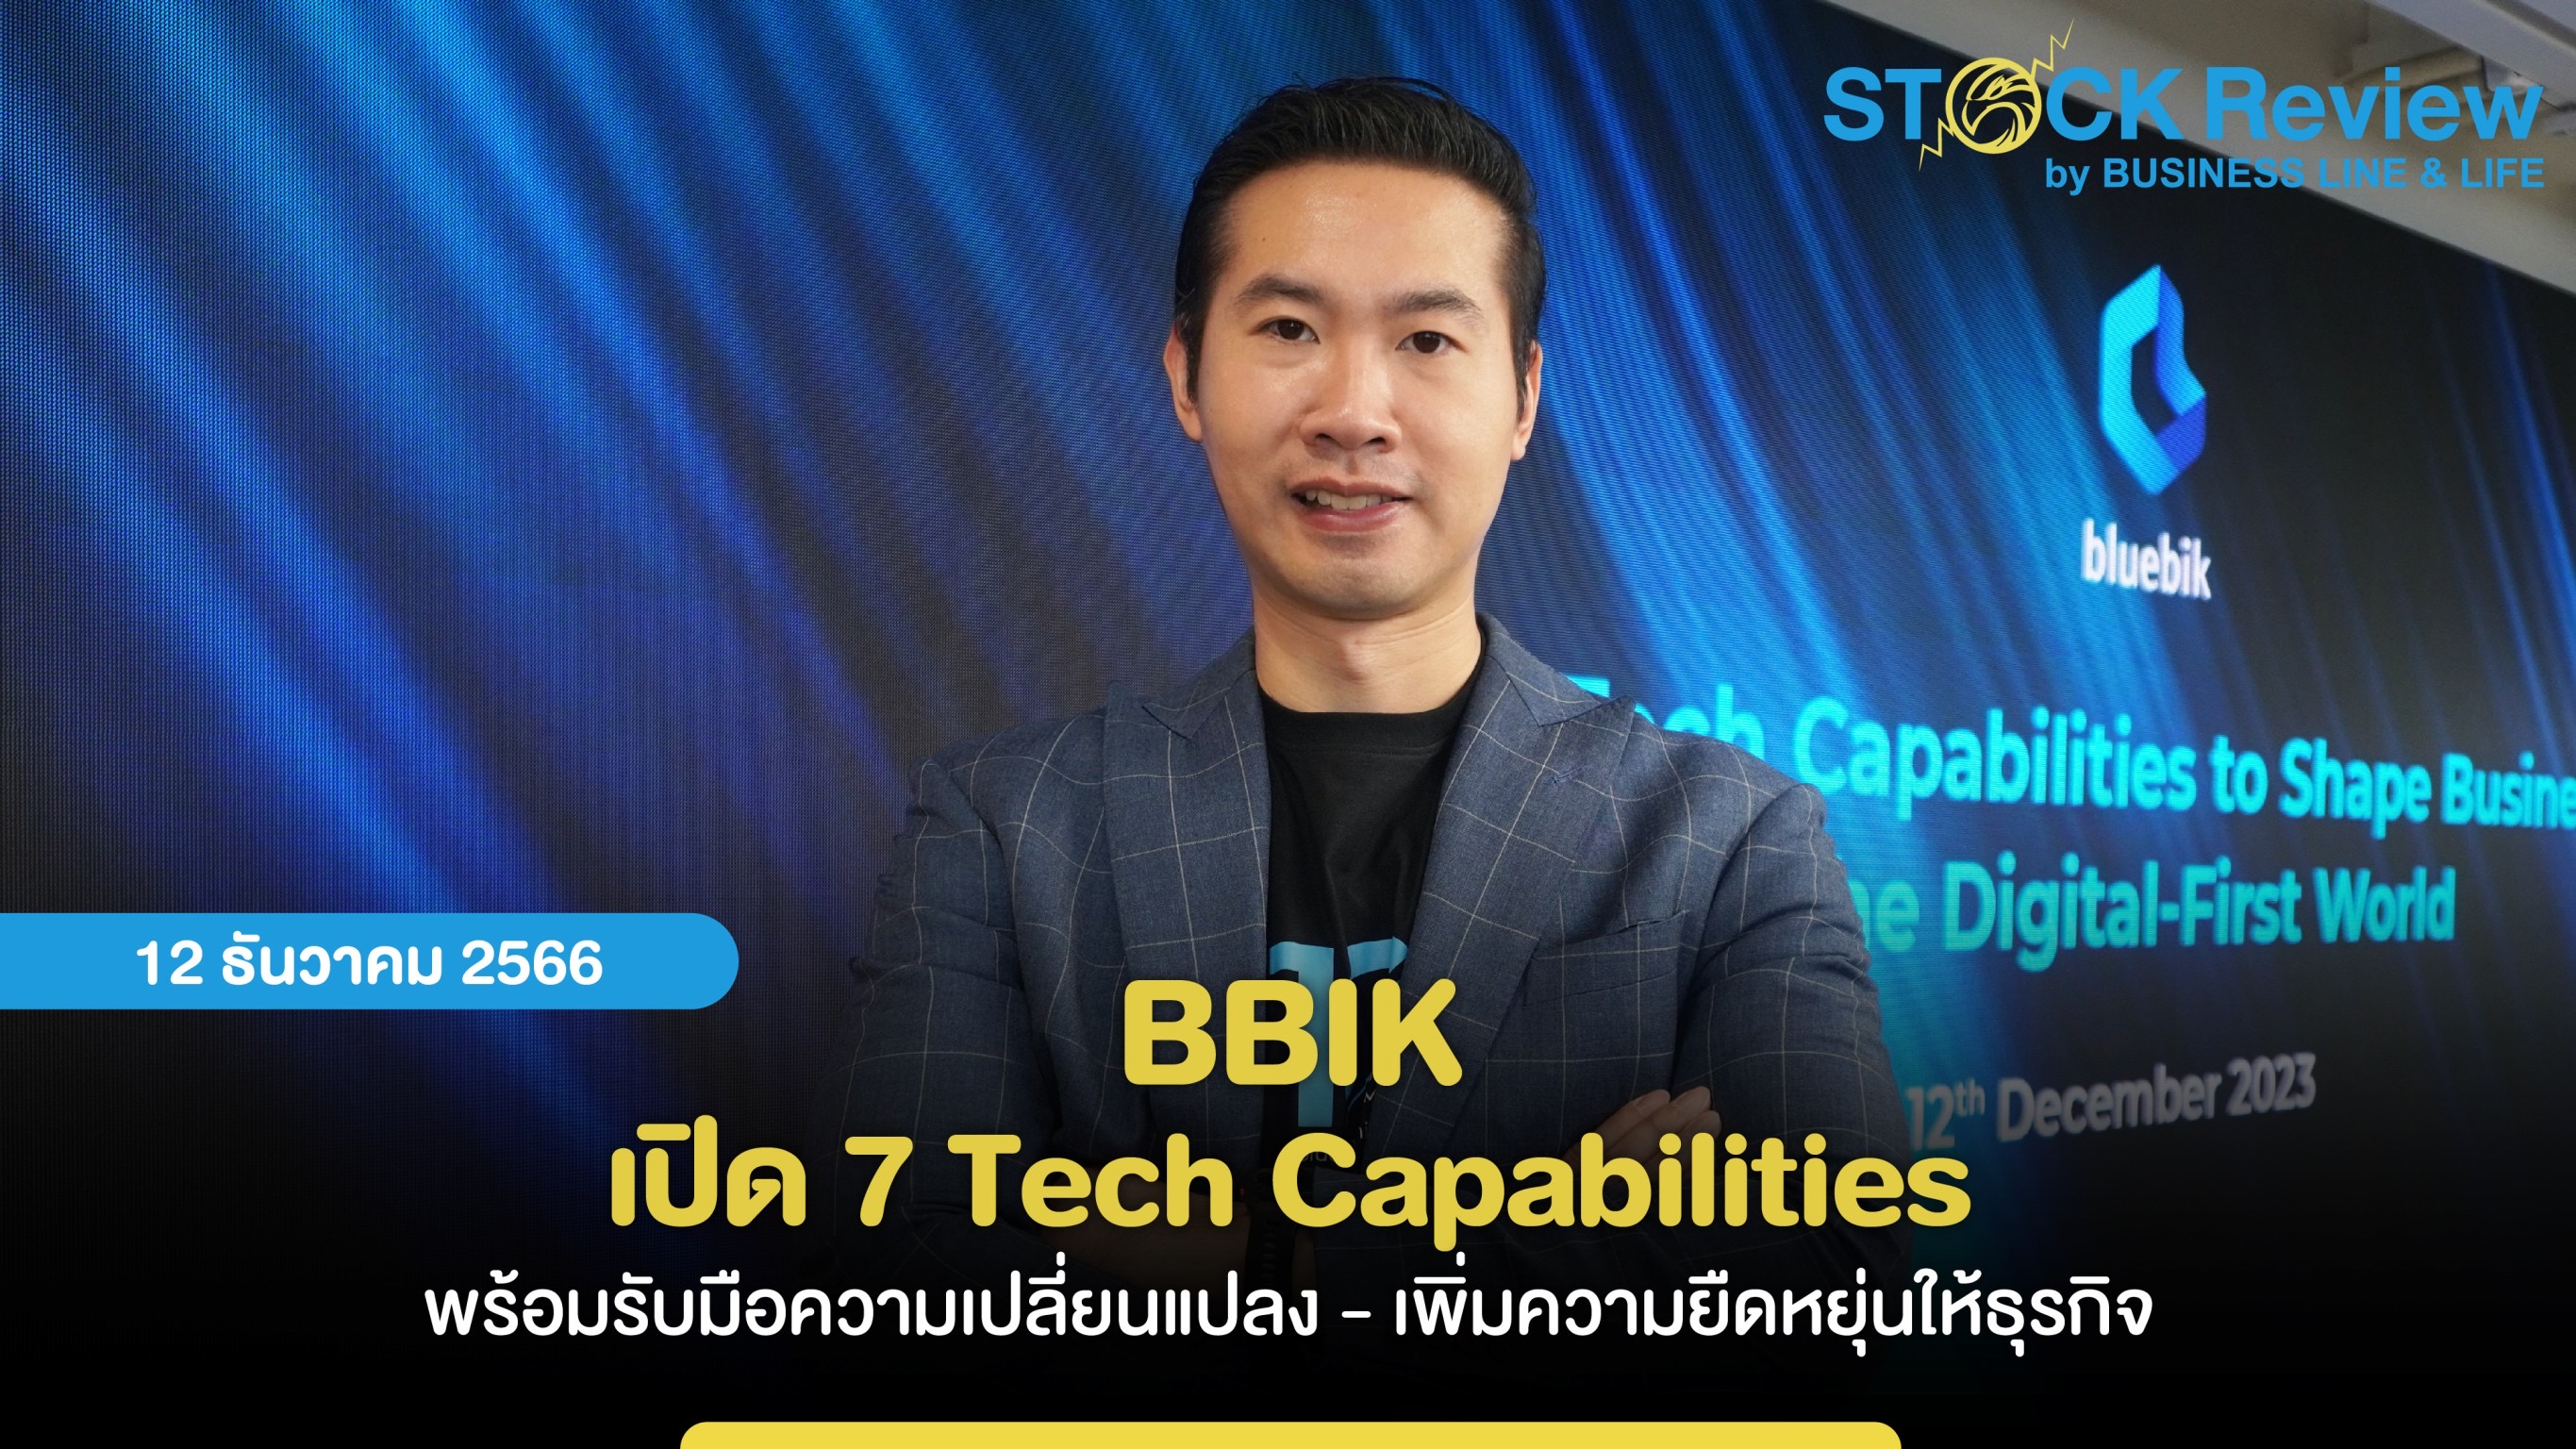 BBIK เปิด 7 Tech Capabilities  พร้อมรับมือความเปลี่ยนแปลง - เพิ่มความยืดหยุ่นให้ธุรกิจ  มุ่งสู่การเป็น Digital-First Company เพื่อเติบโตอย่างยั่งยืน